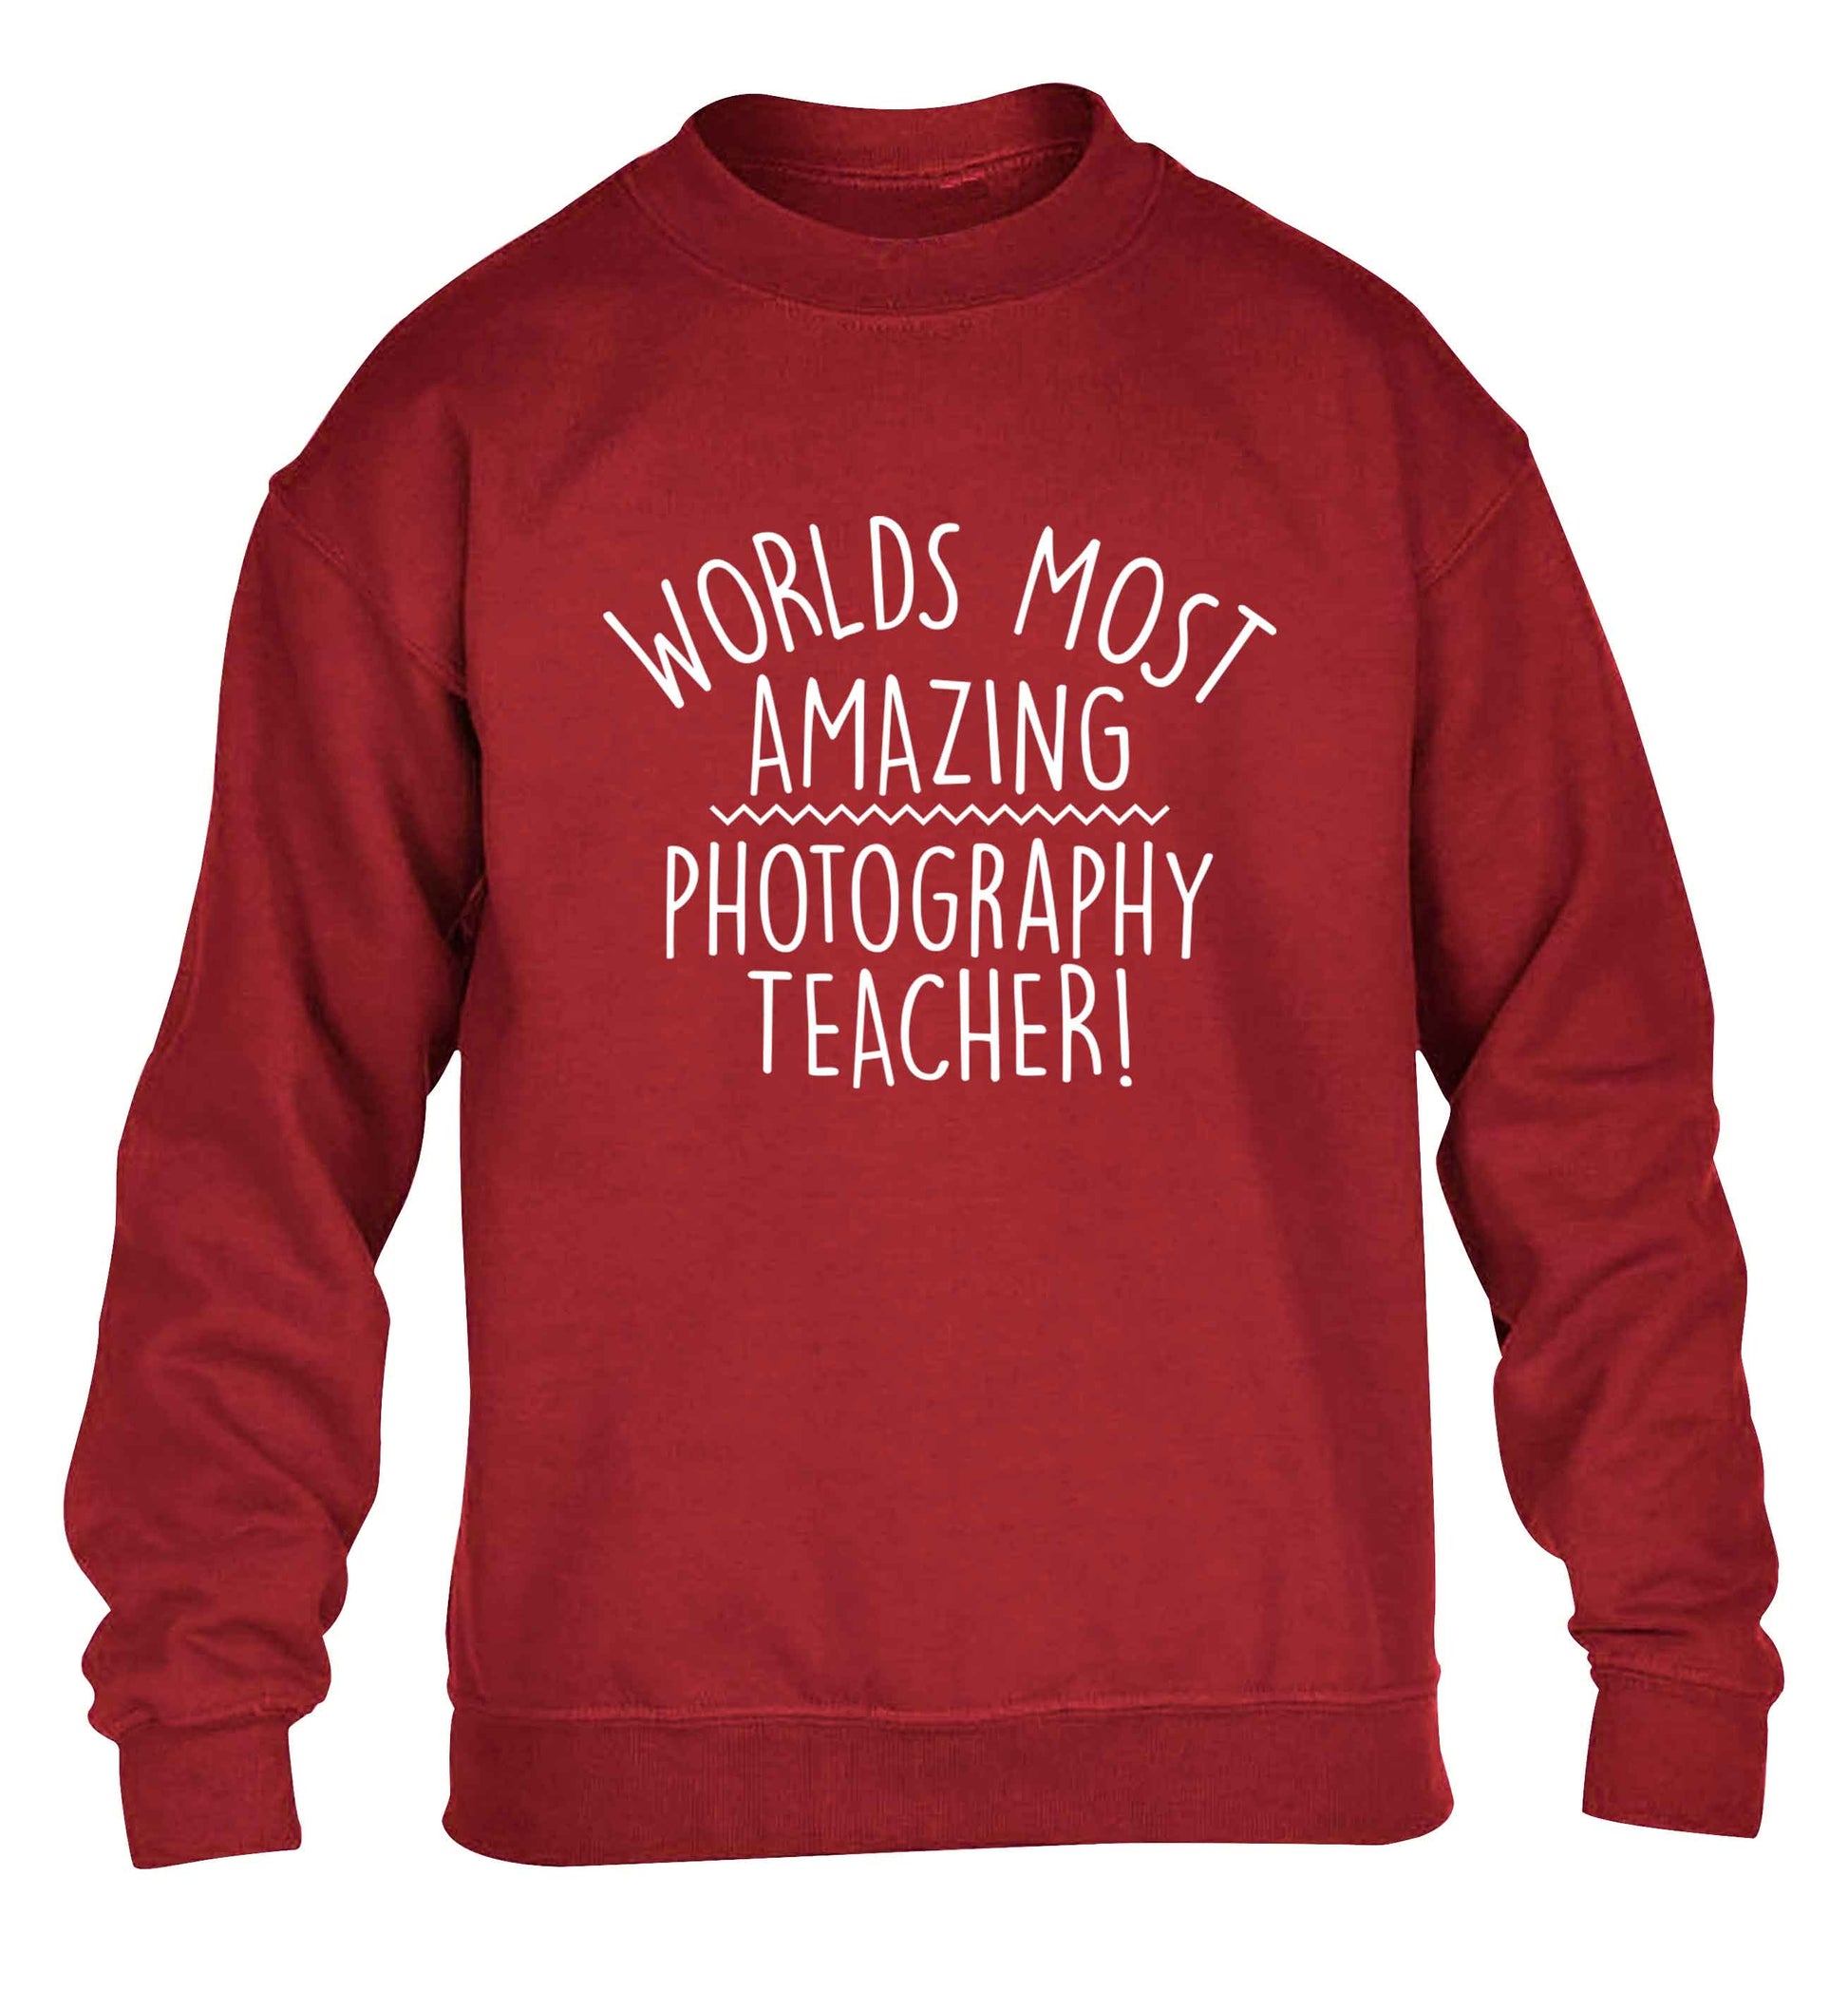 Worlds most amazing photography teacher children's grey sweater 12-13 Years